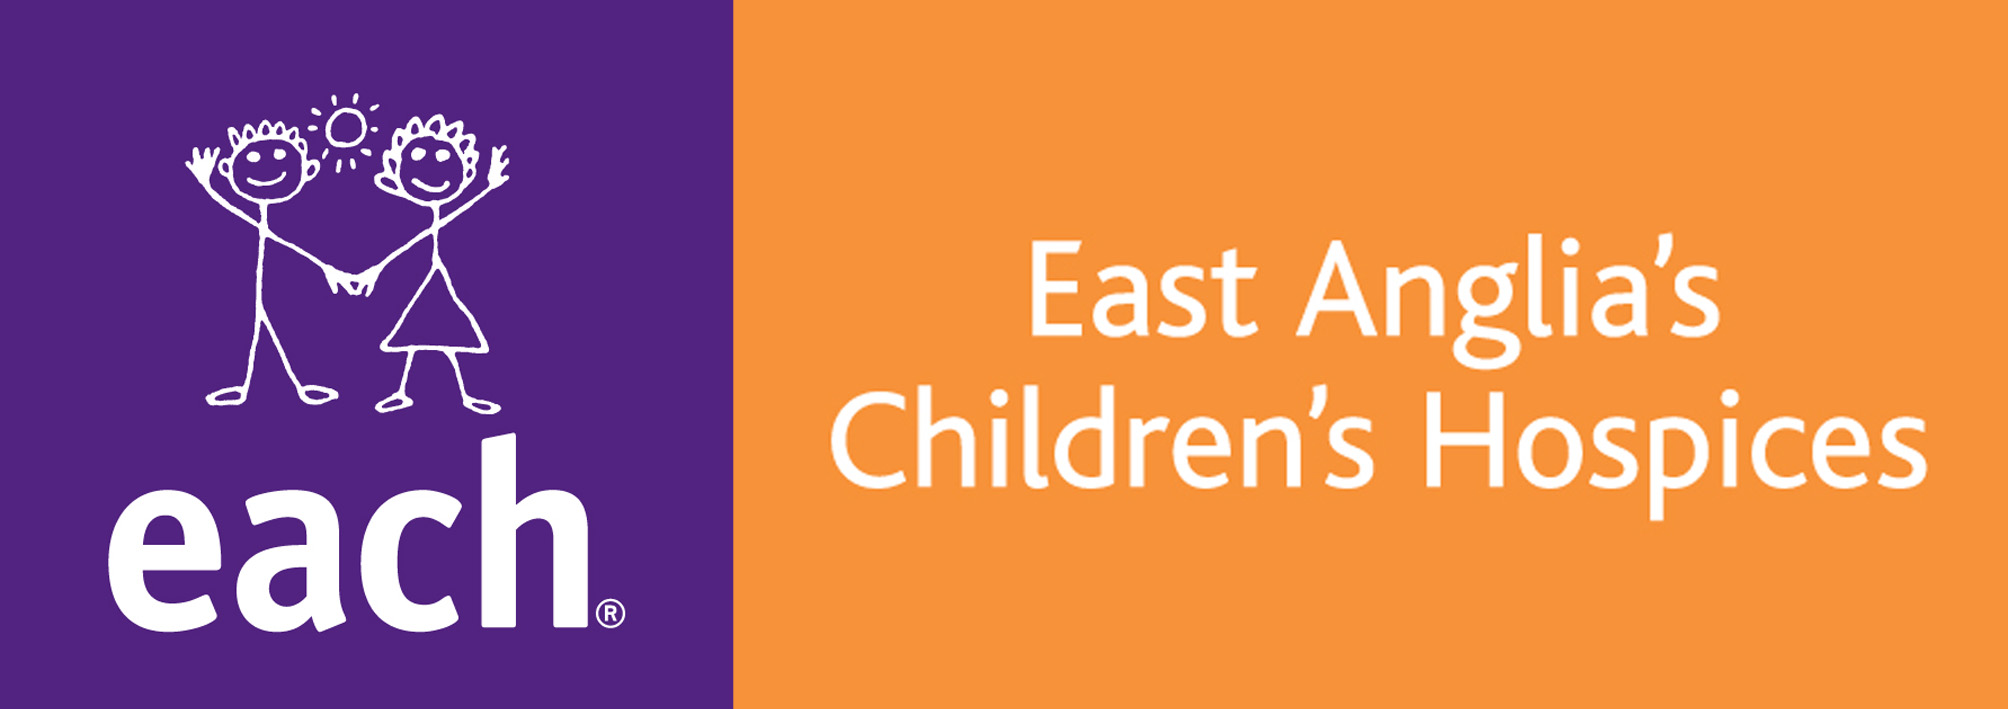 East Anglia's Children's Hospices Logo